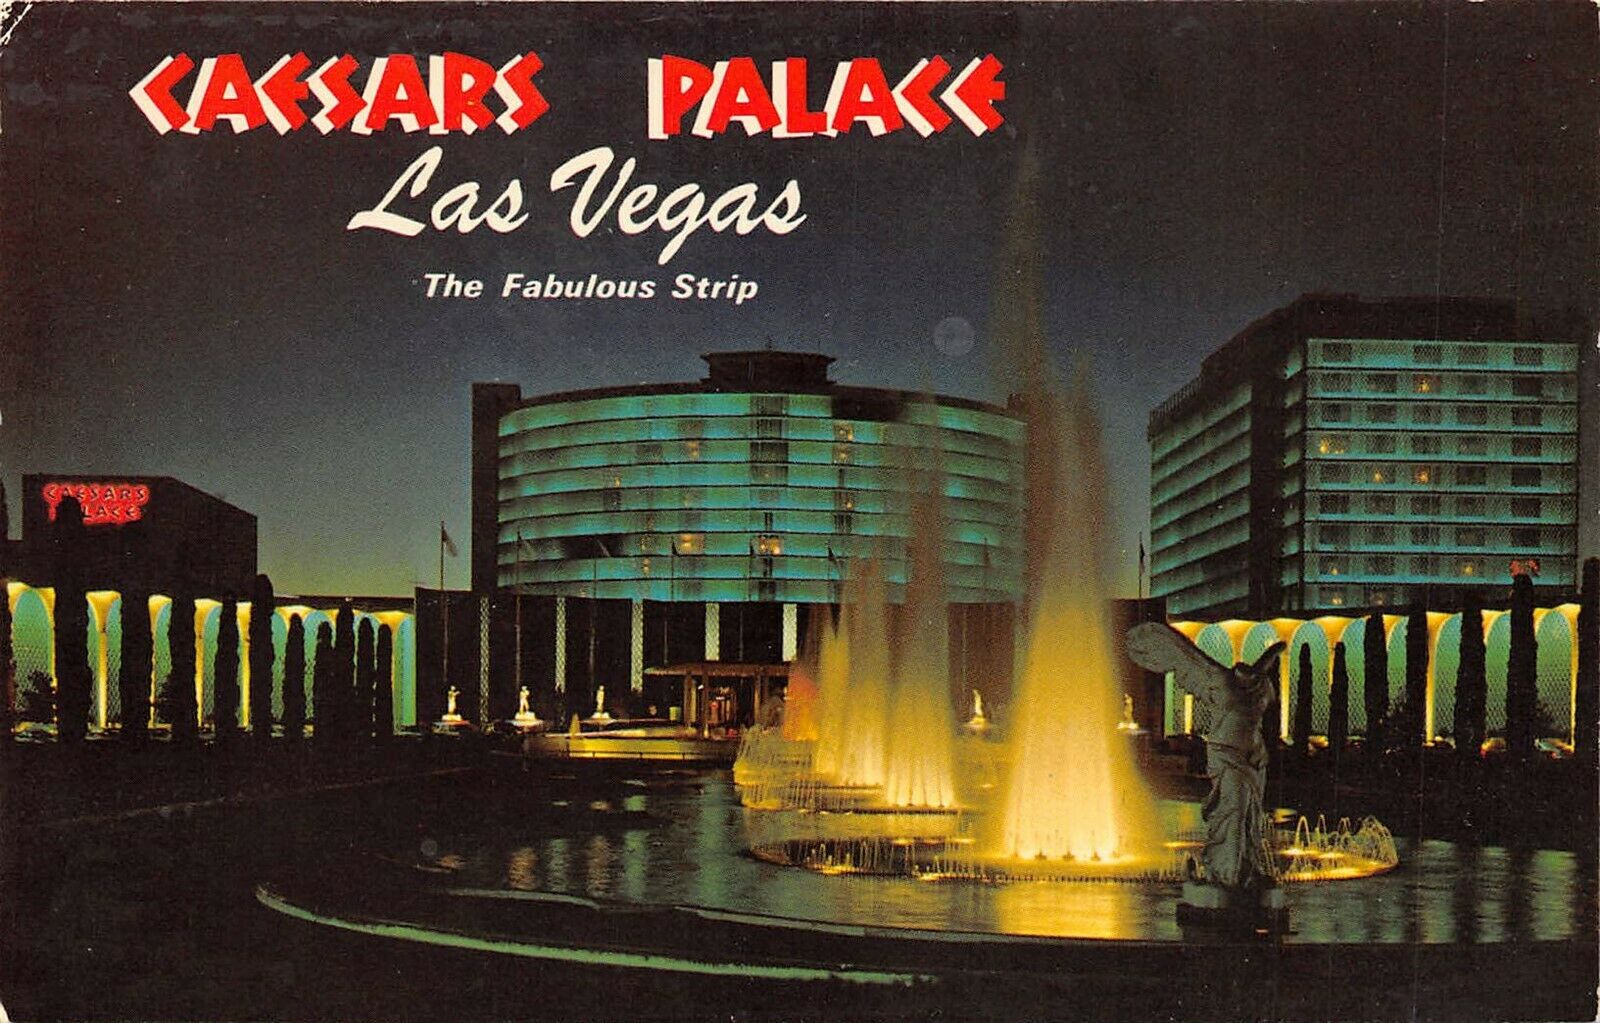 The Riviera Hotel Casino 1967 - Las Vegas, Postcard - Opene…